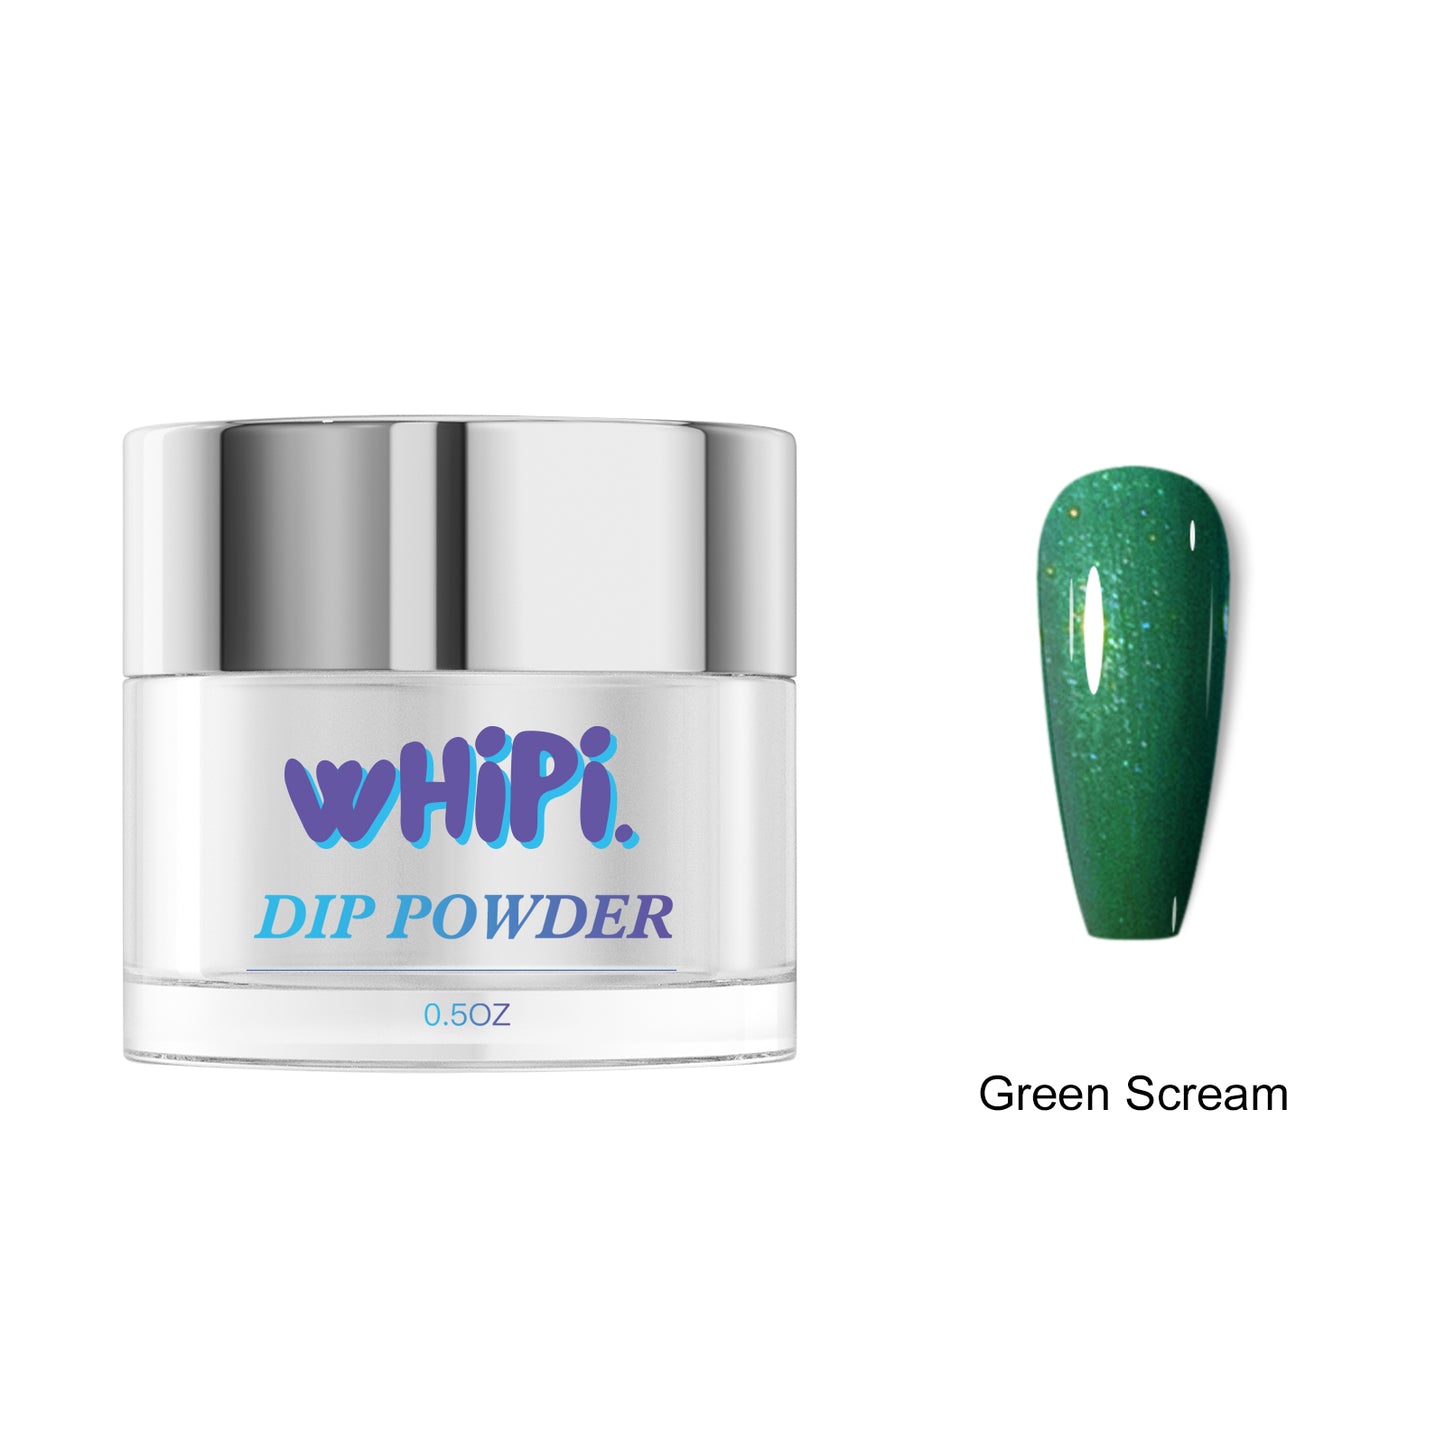 Green Scream Dip Powder